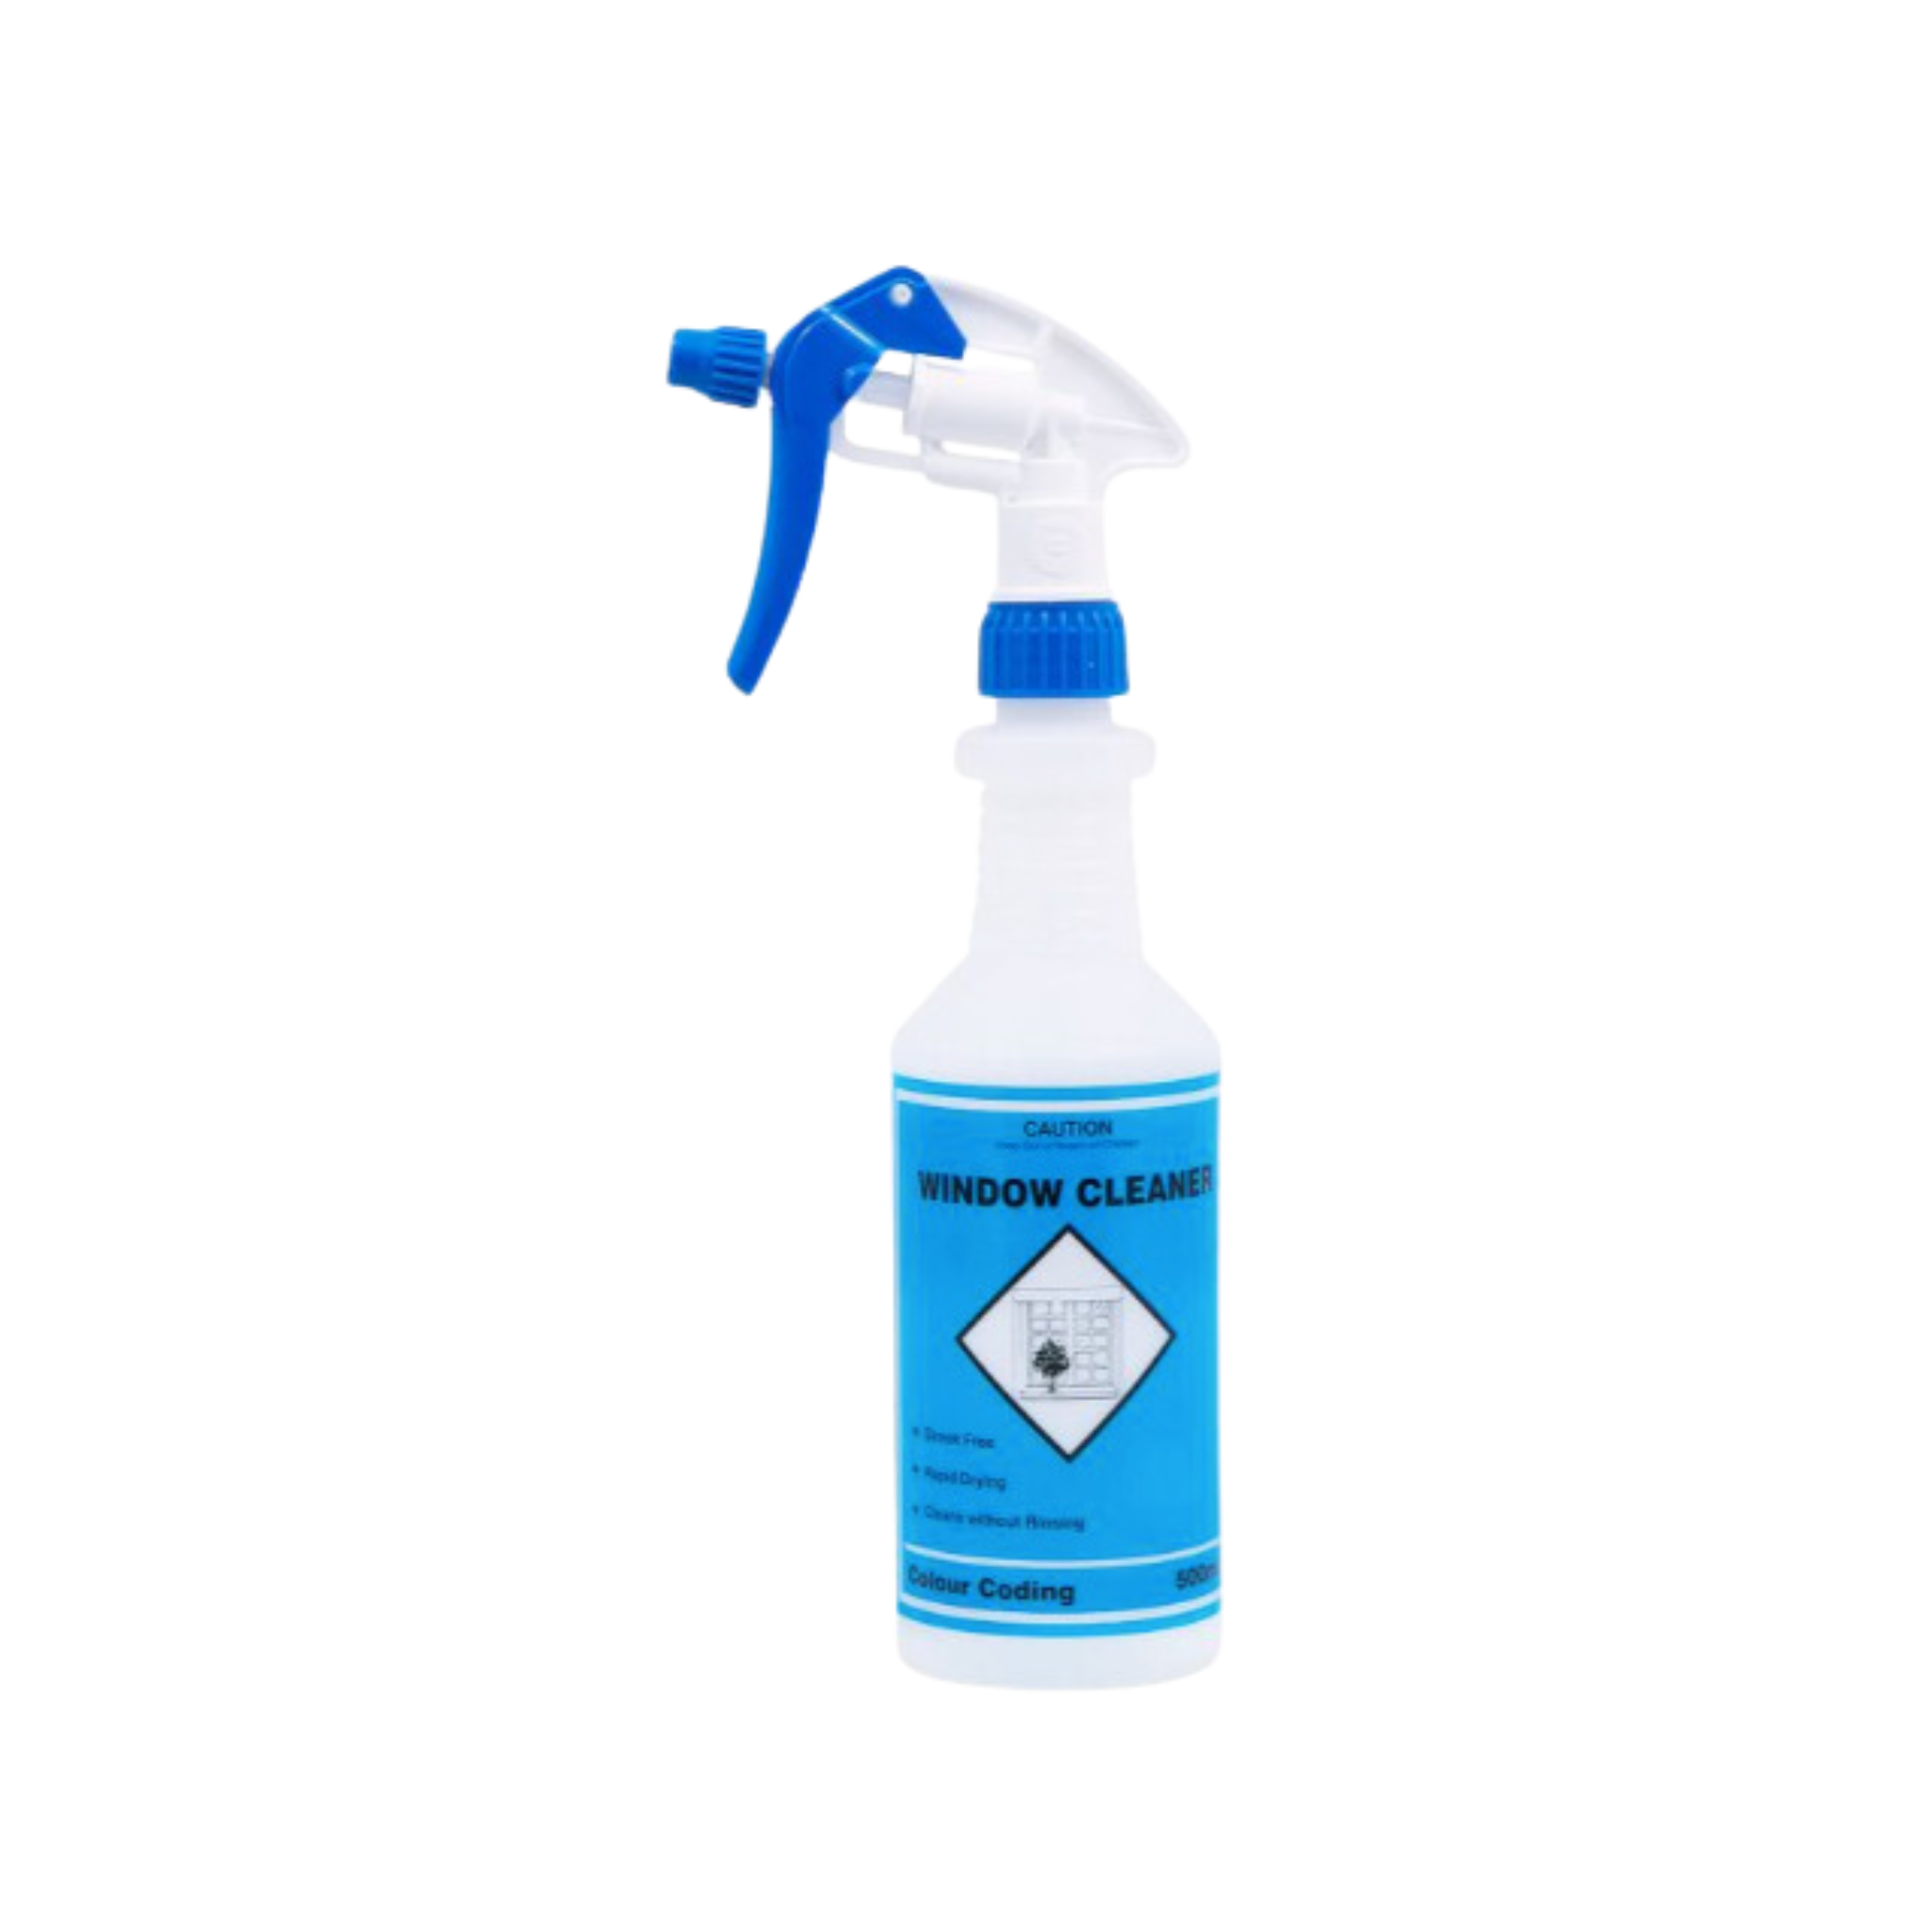 NAN Spray Trigger Bottle - Window Cleaner